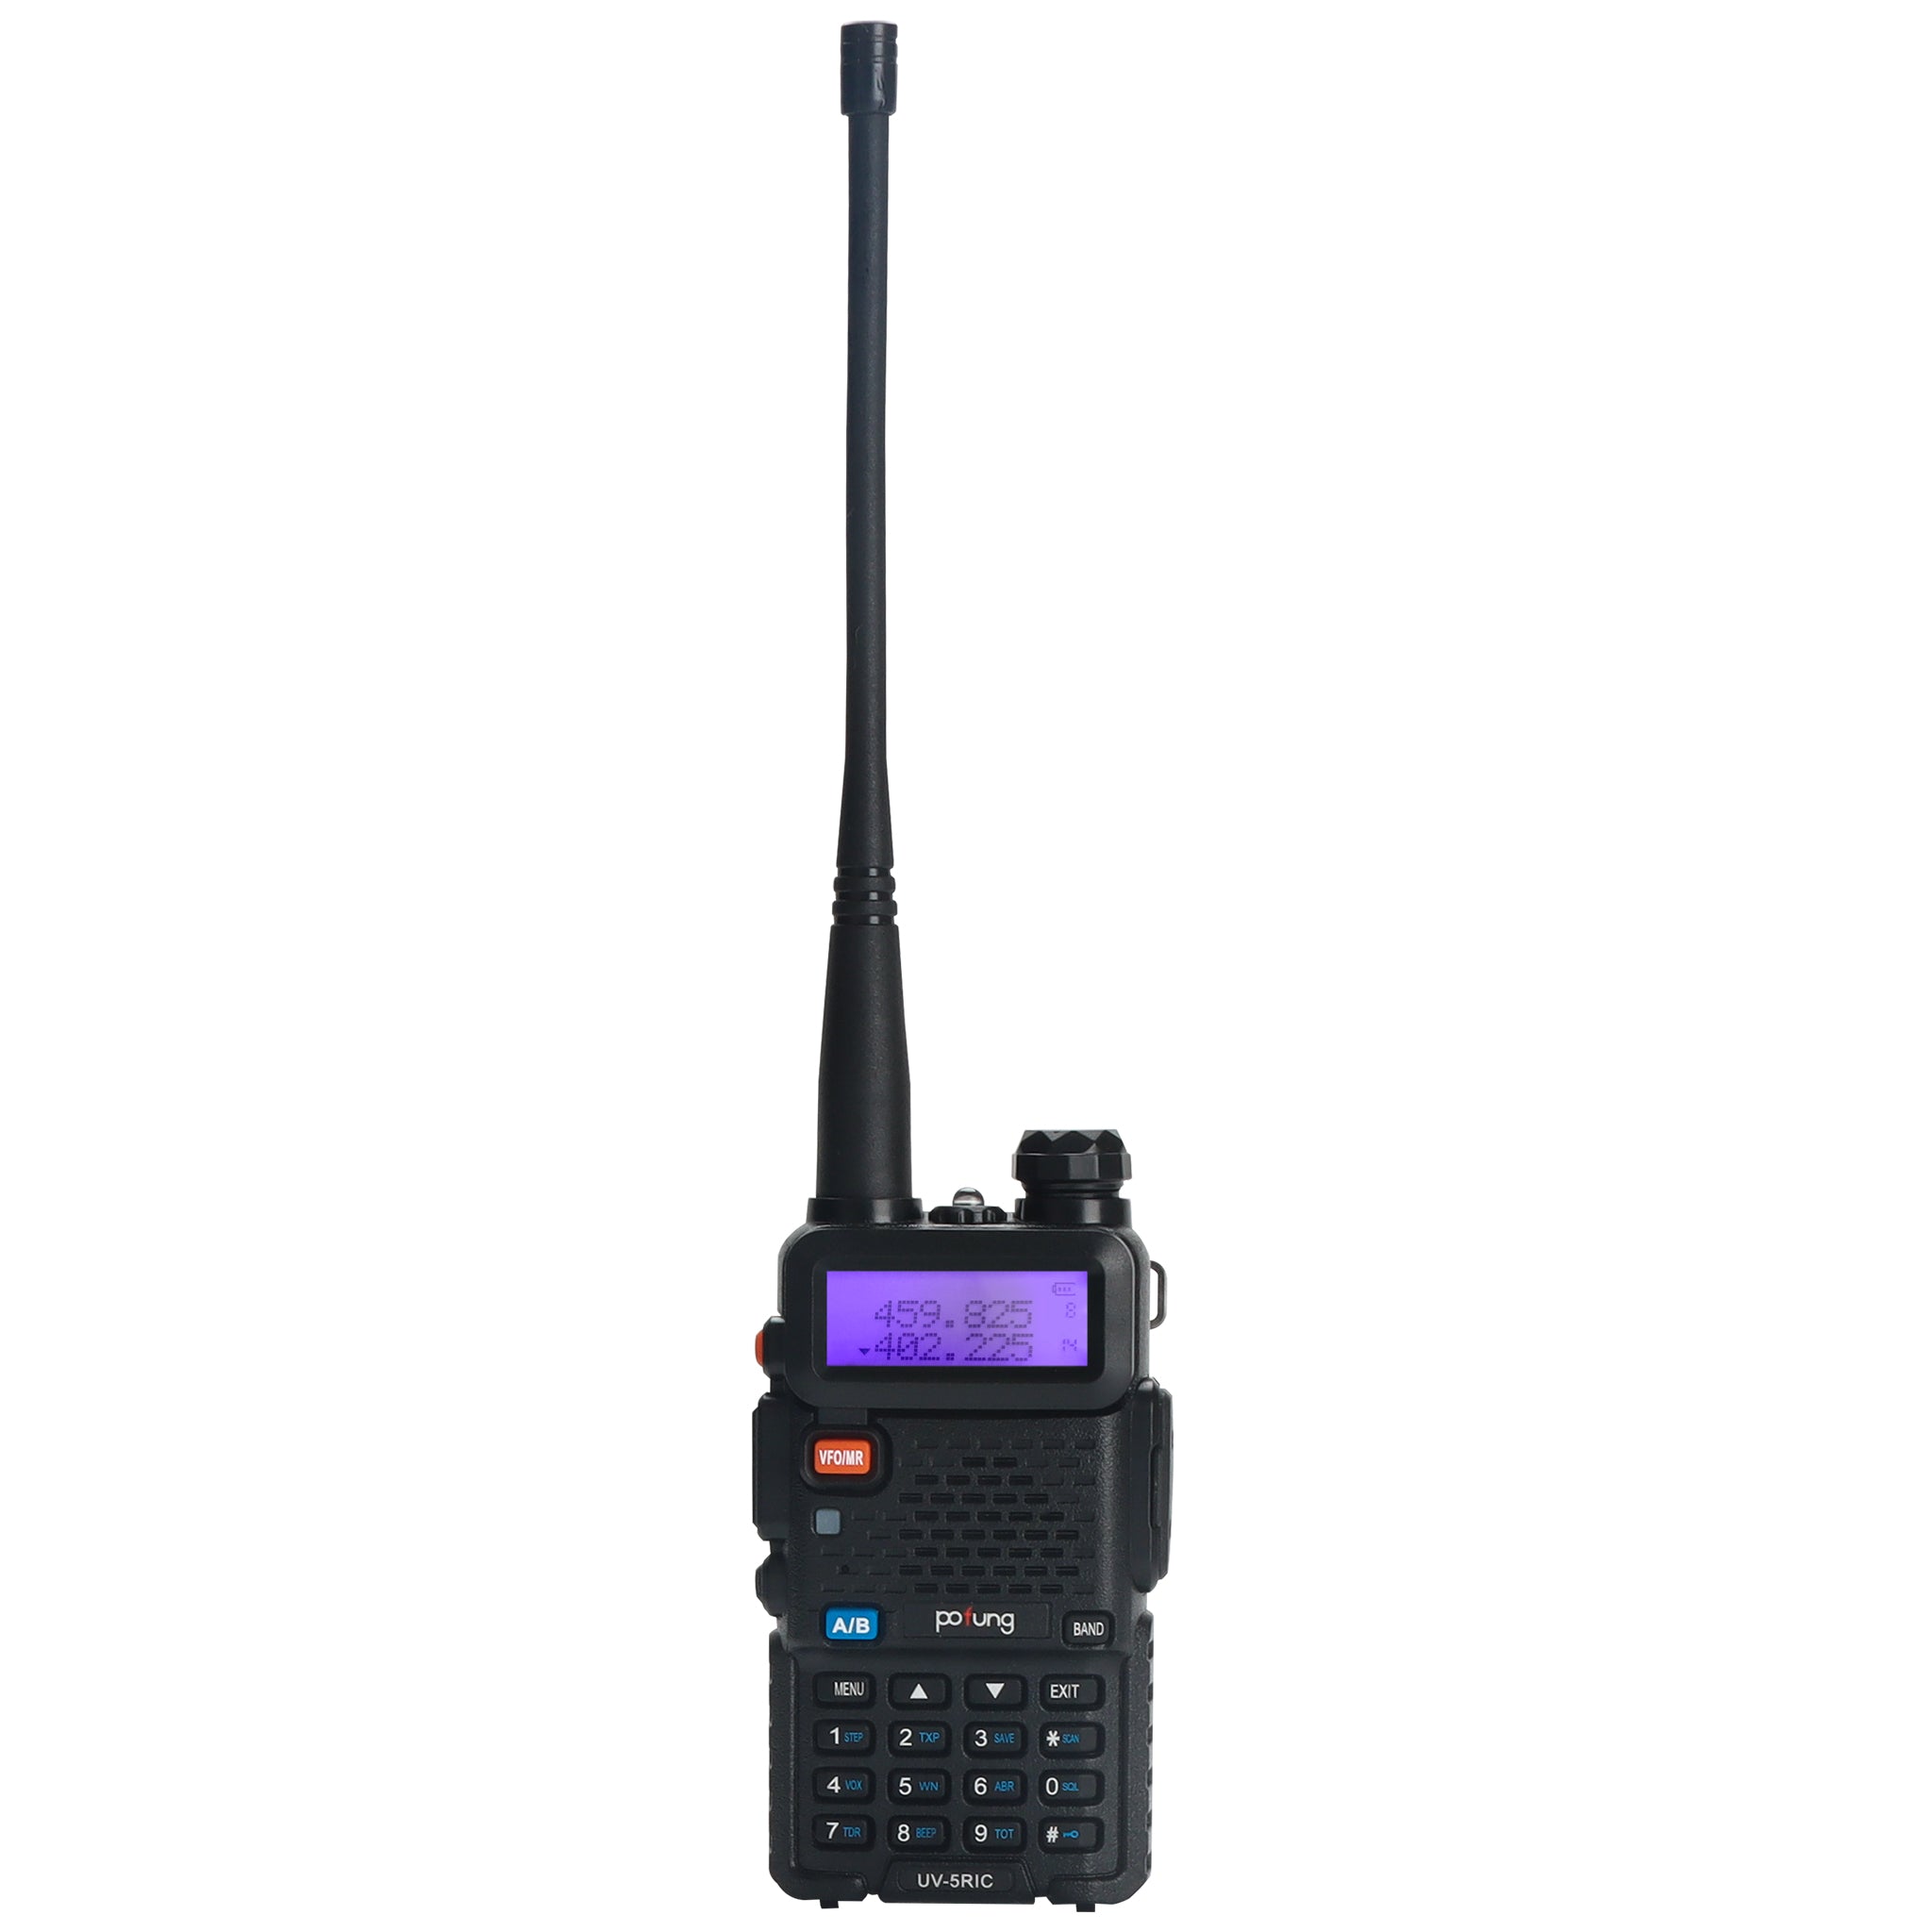 POFUNG BAOFENG UV-5RIC VHF 144-148 MHZ UHF 430-450 MHZ DUAL BAND TWO W